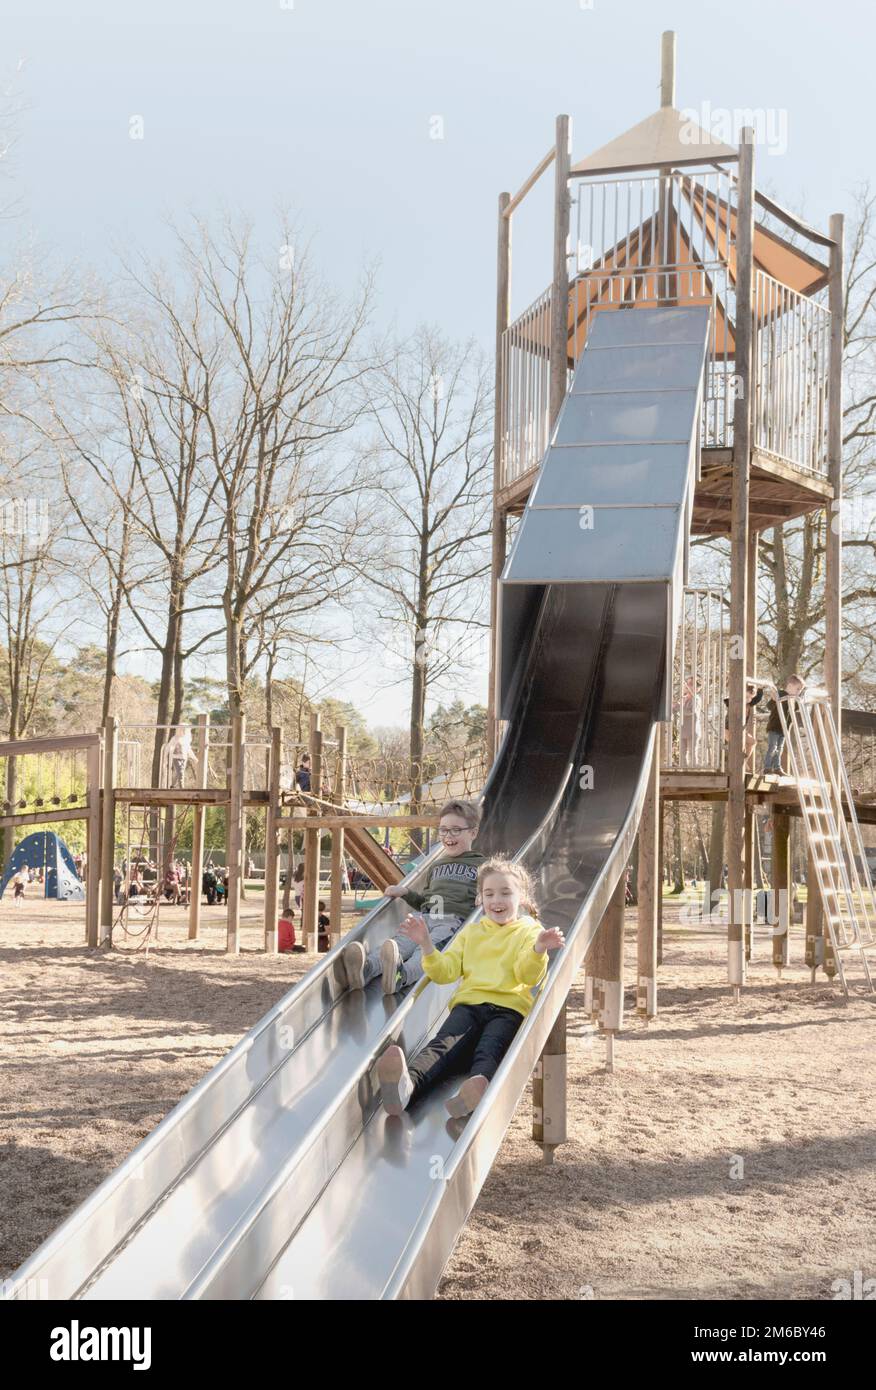 Children slide down a high slide in the park Stock Photo